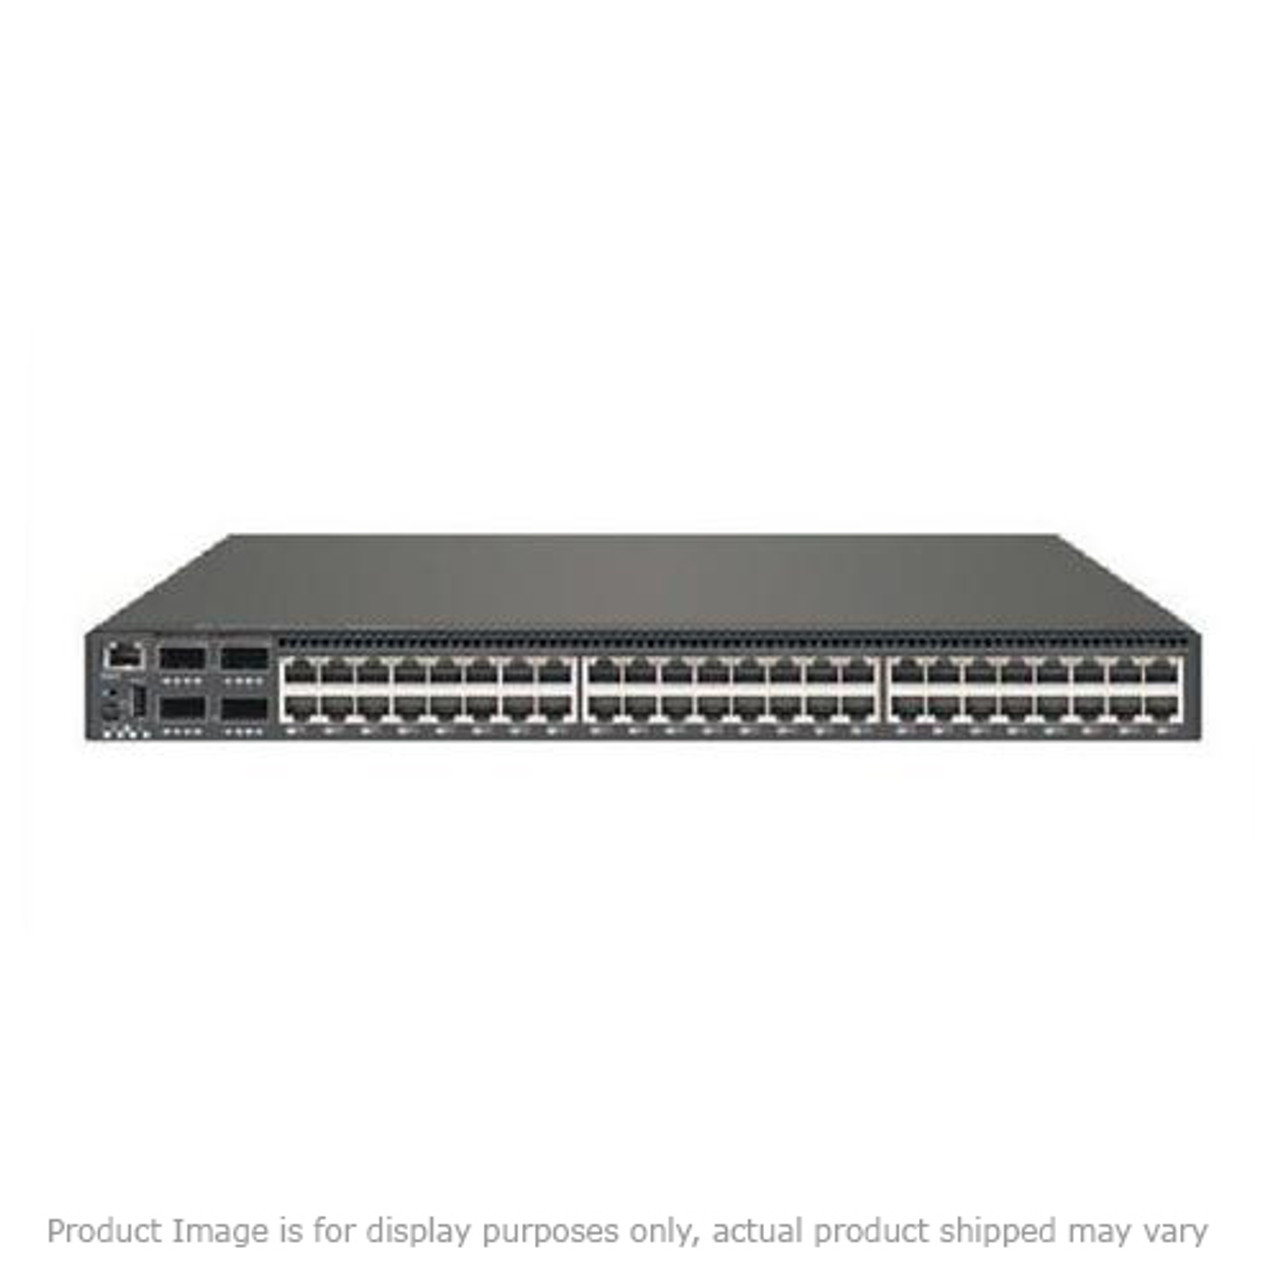 02L0877 IBM 24 Port 10Base Ethernet LAN Switch (Refurbished)